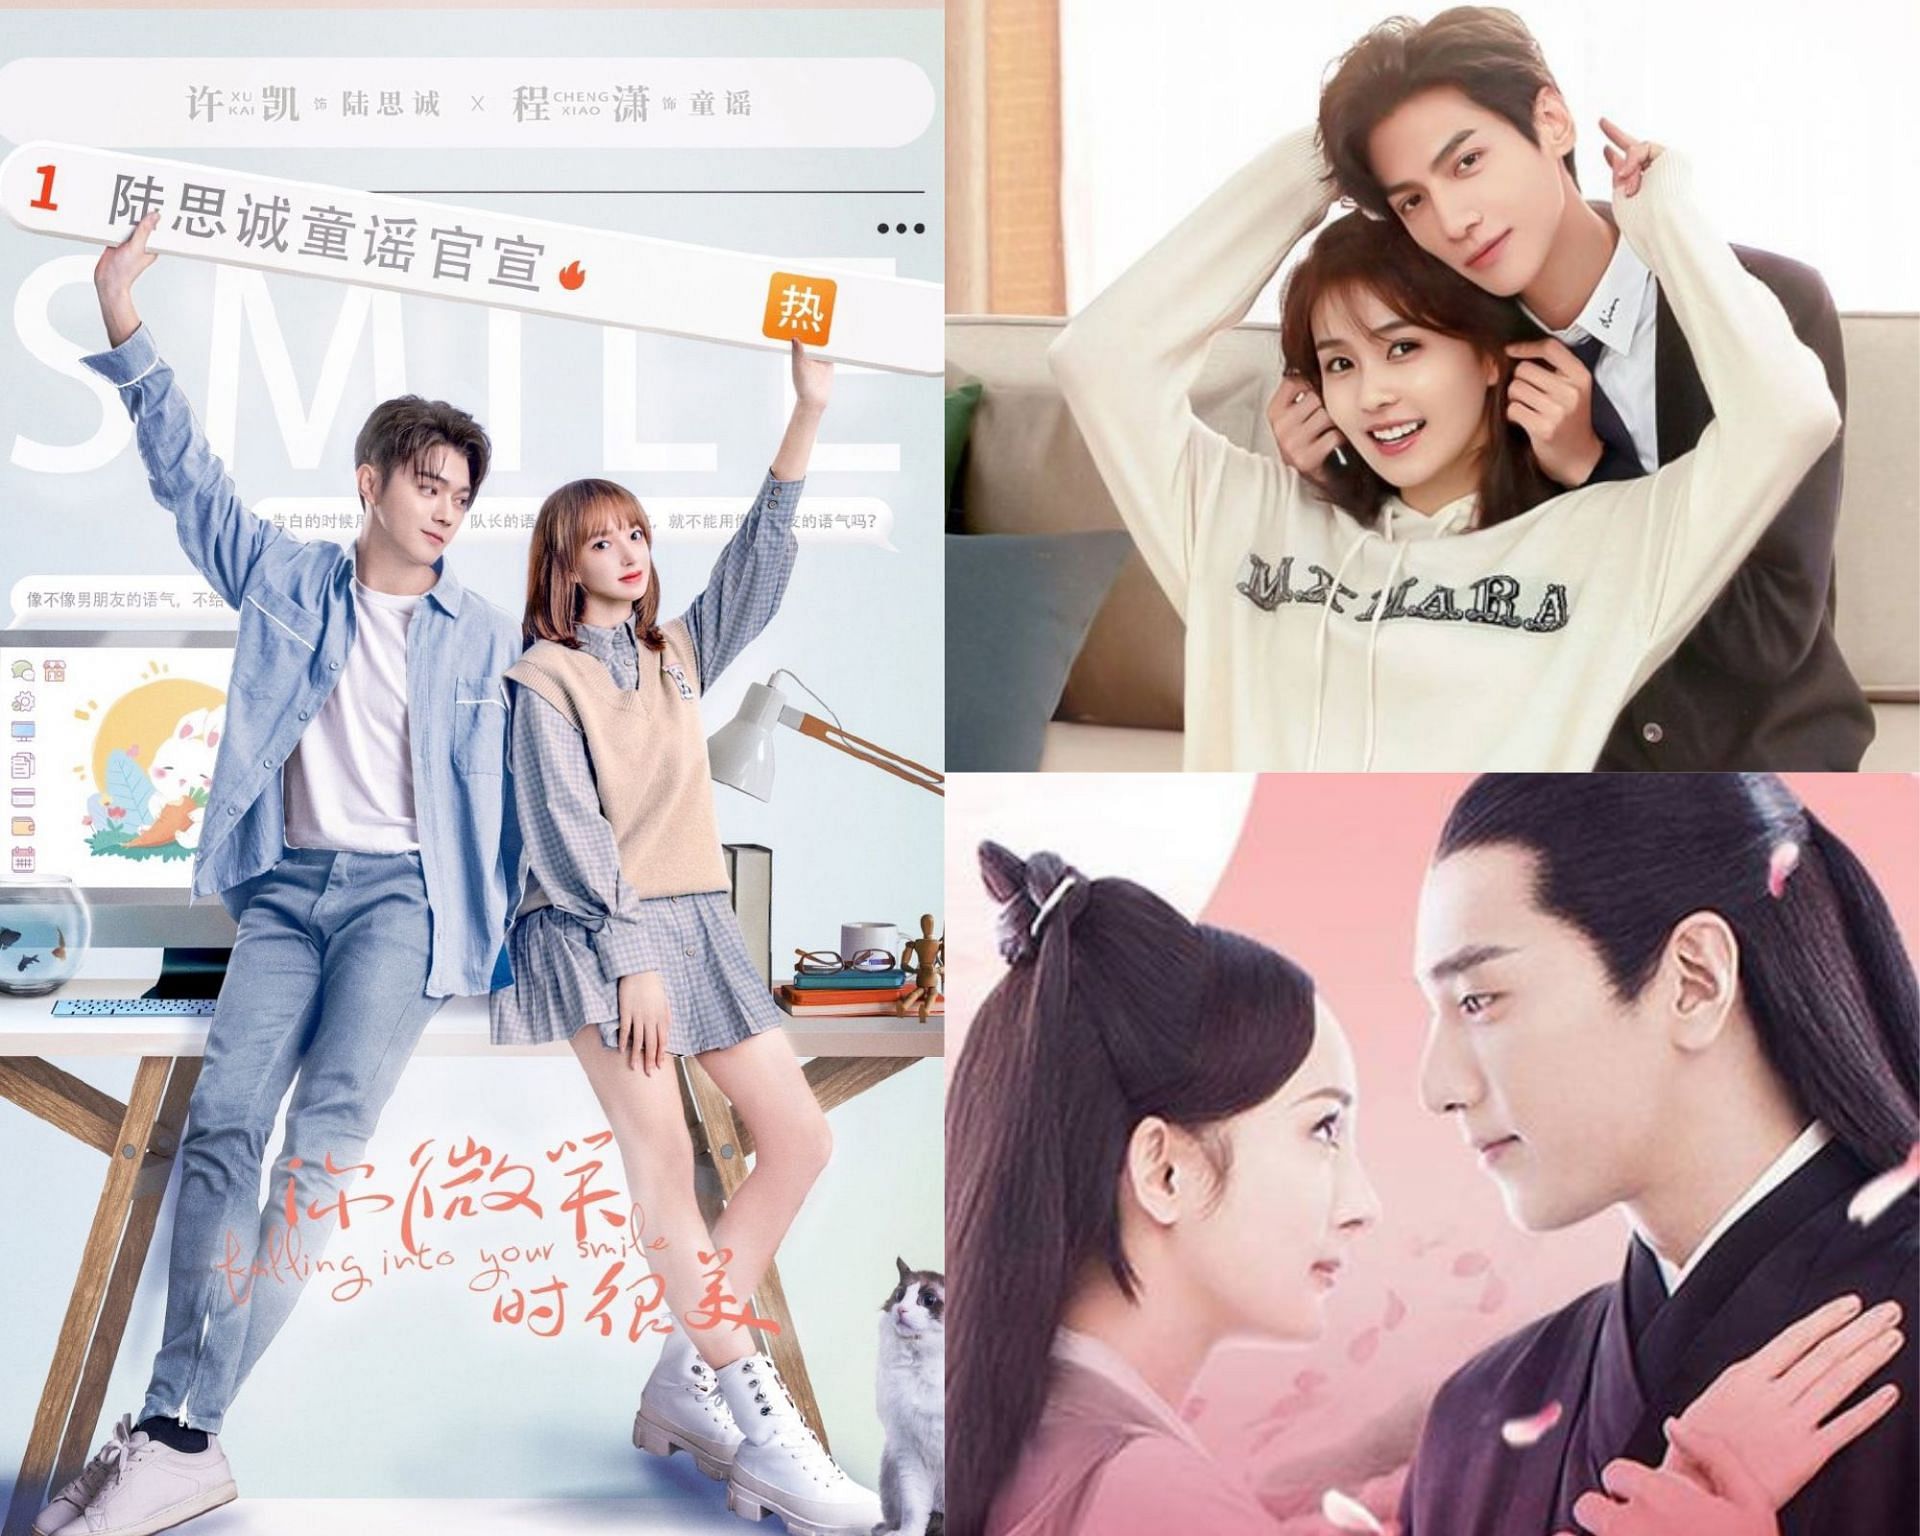 8 mustwatch romantic Chinese dramas on Netflix Lighter and Princess